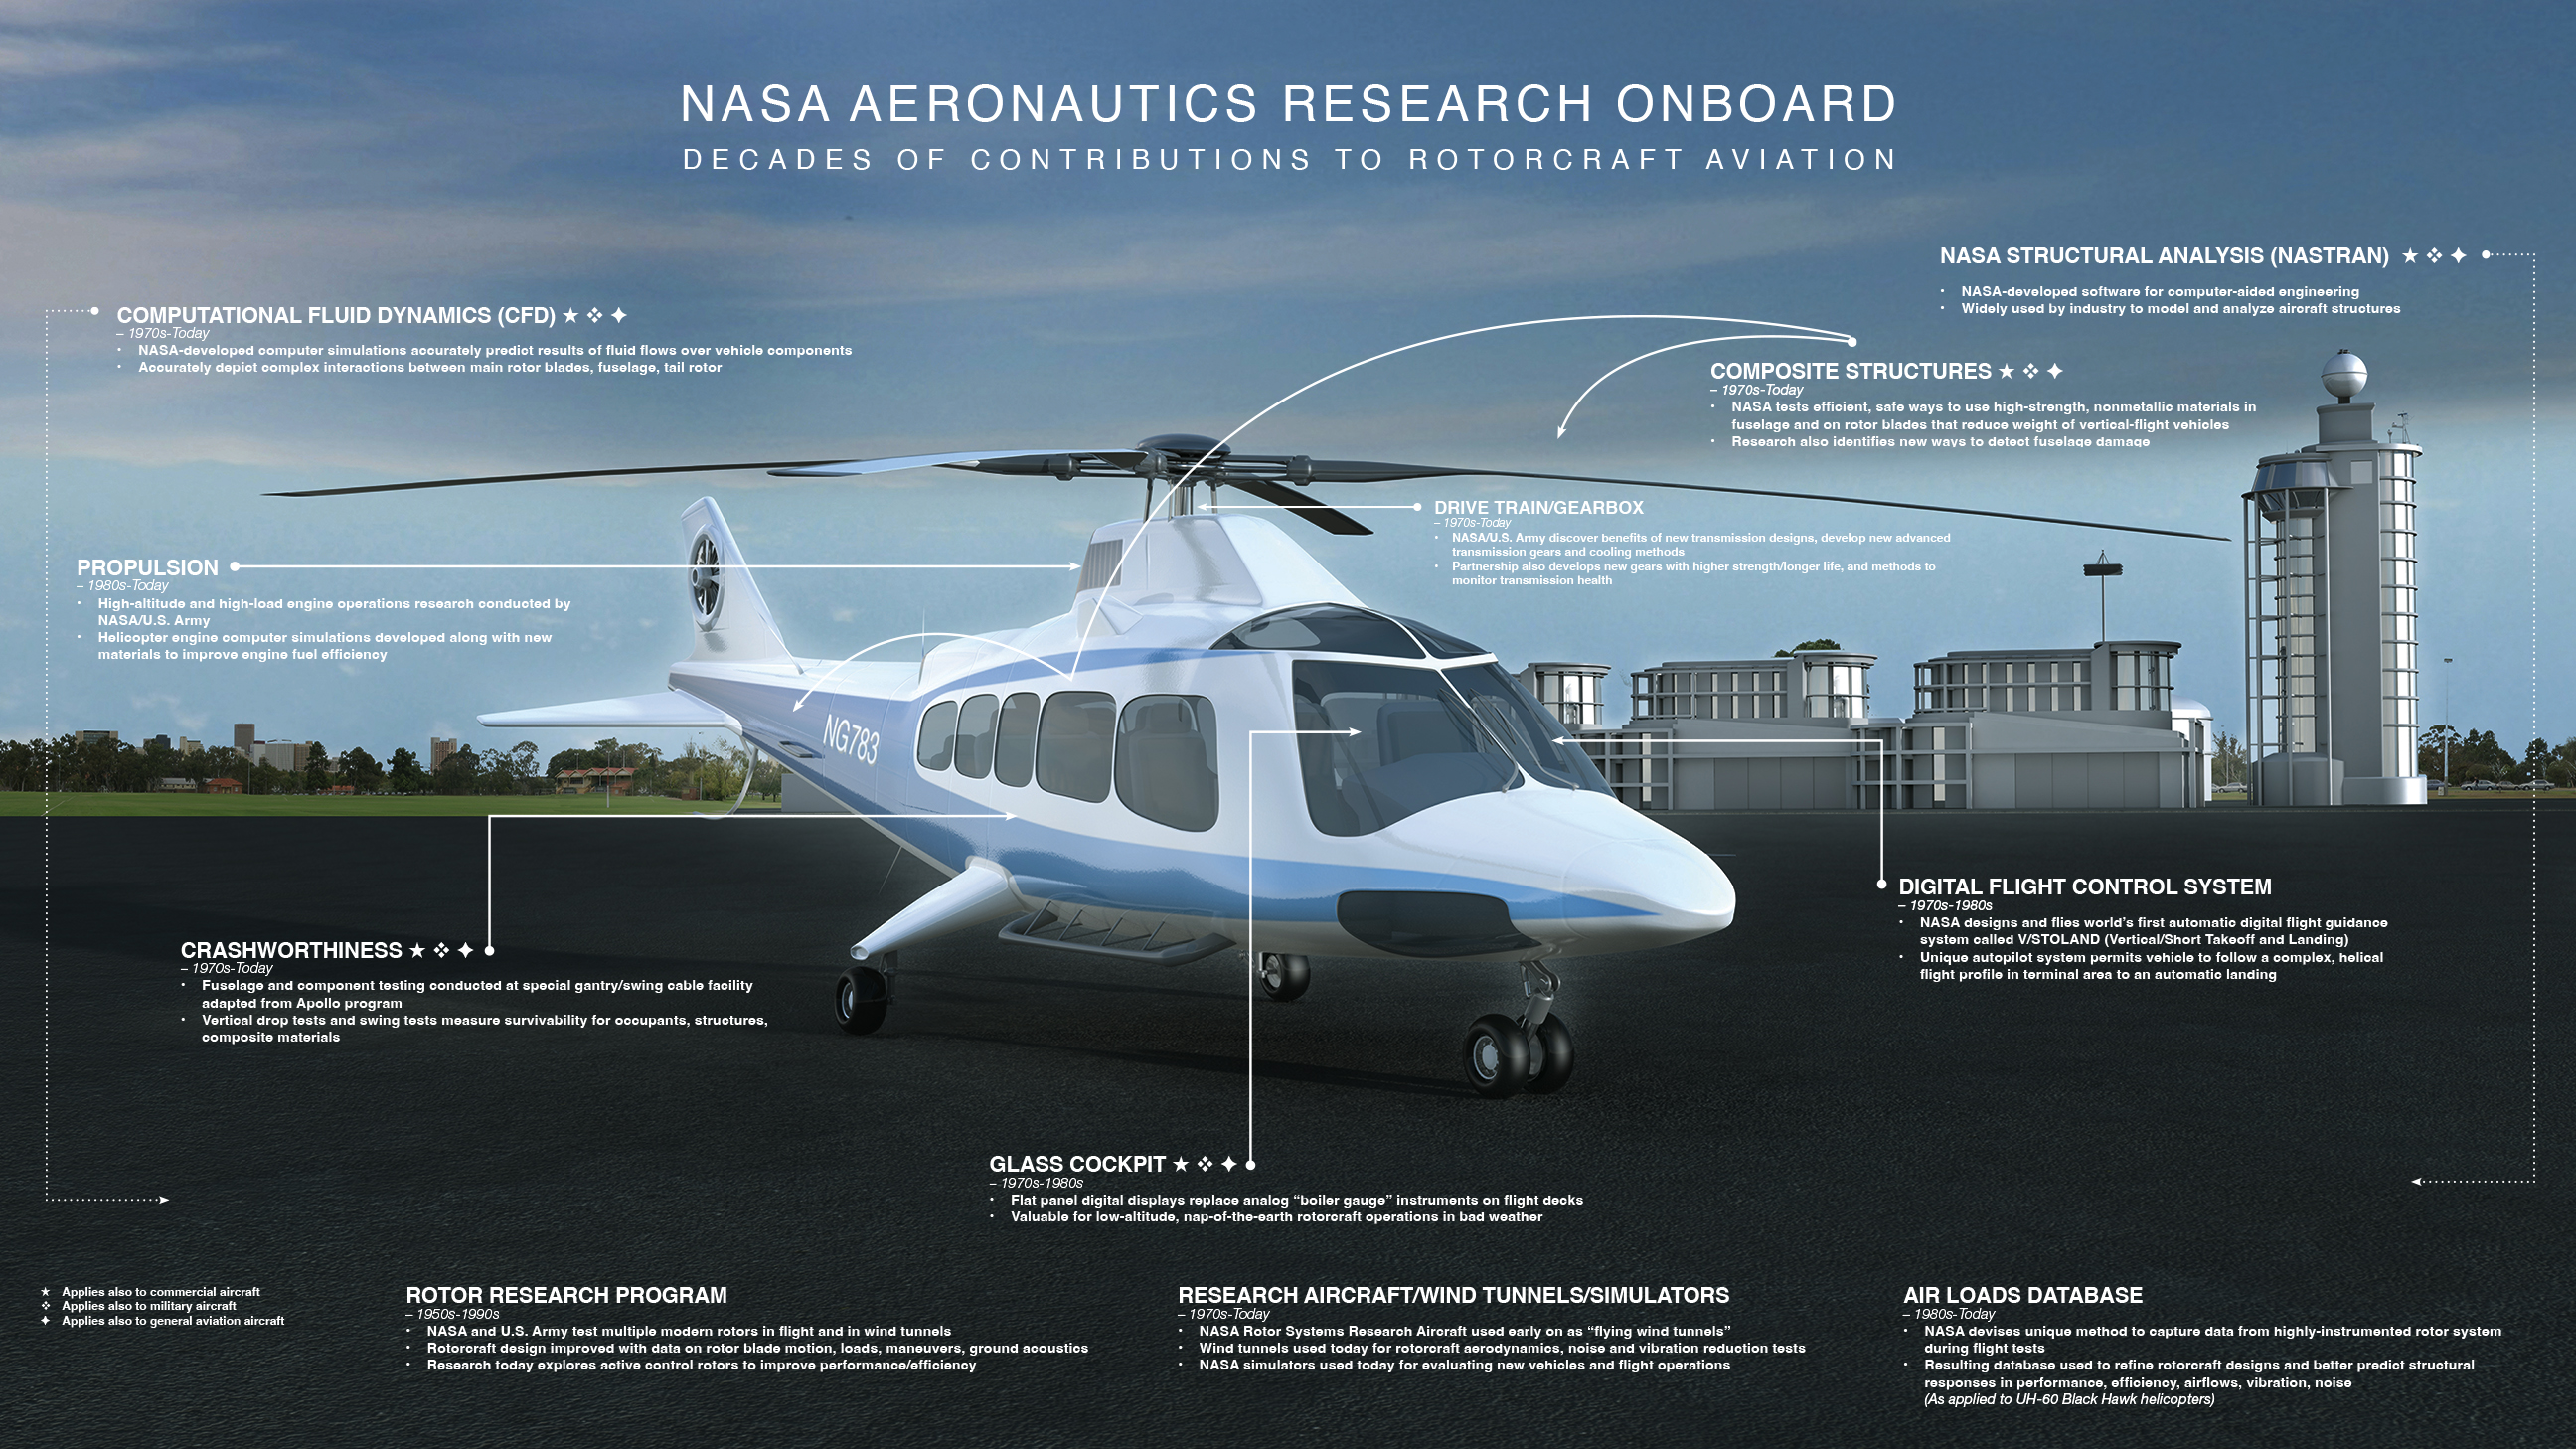 Illustration of a helicopter sitting on tarmac, NASA-developed aeronautics technology text.